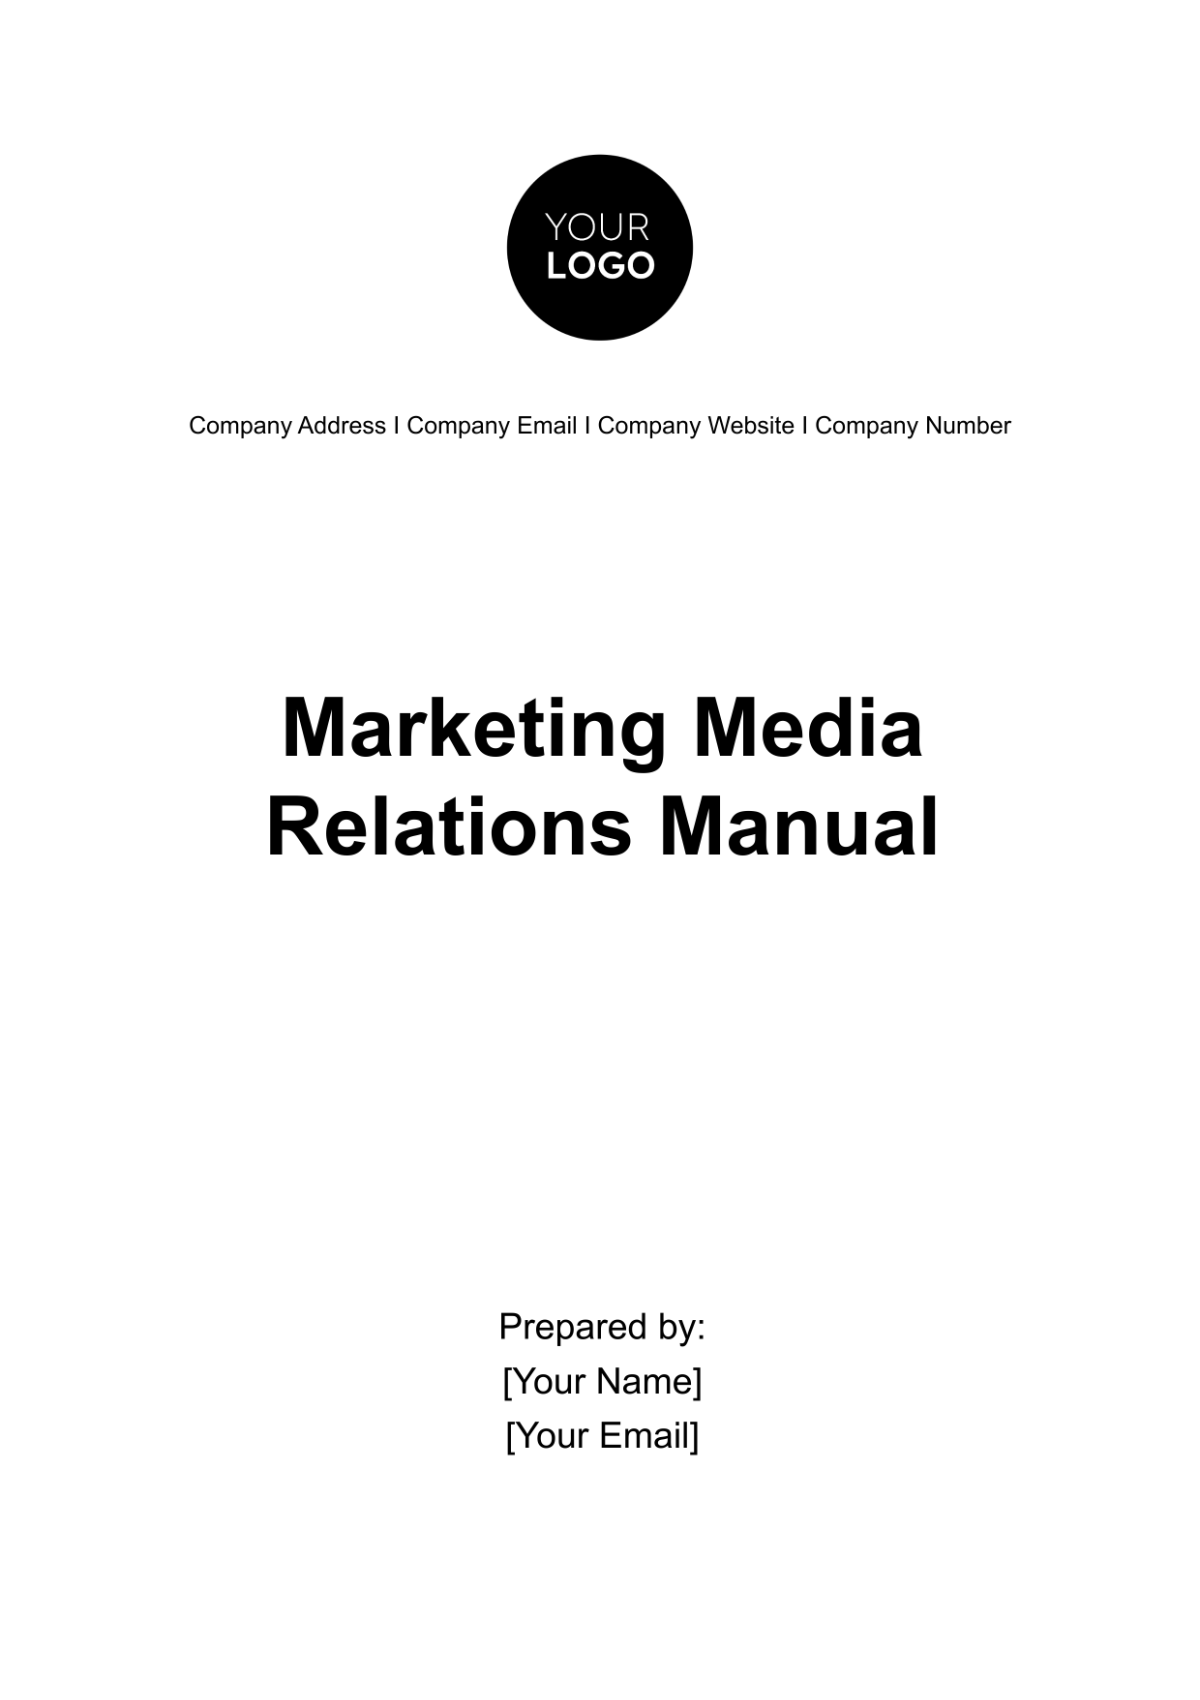 Free Marketing Media Relations Manual Template